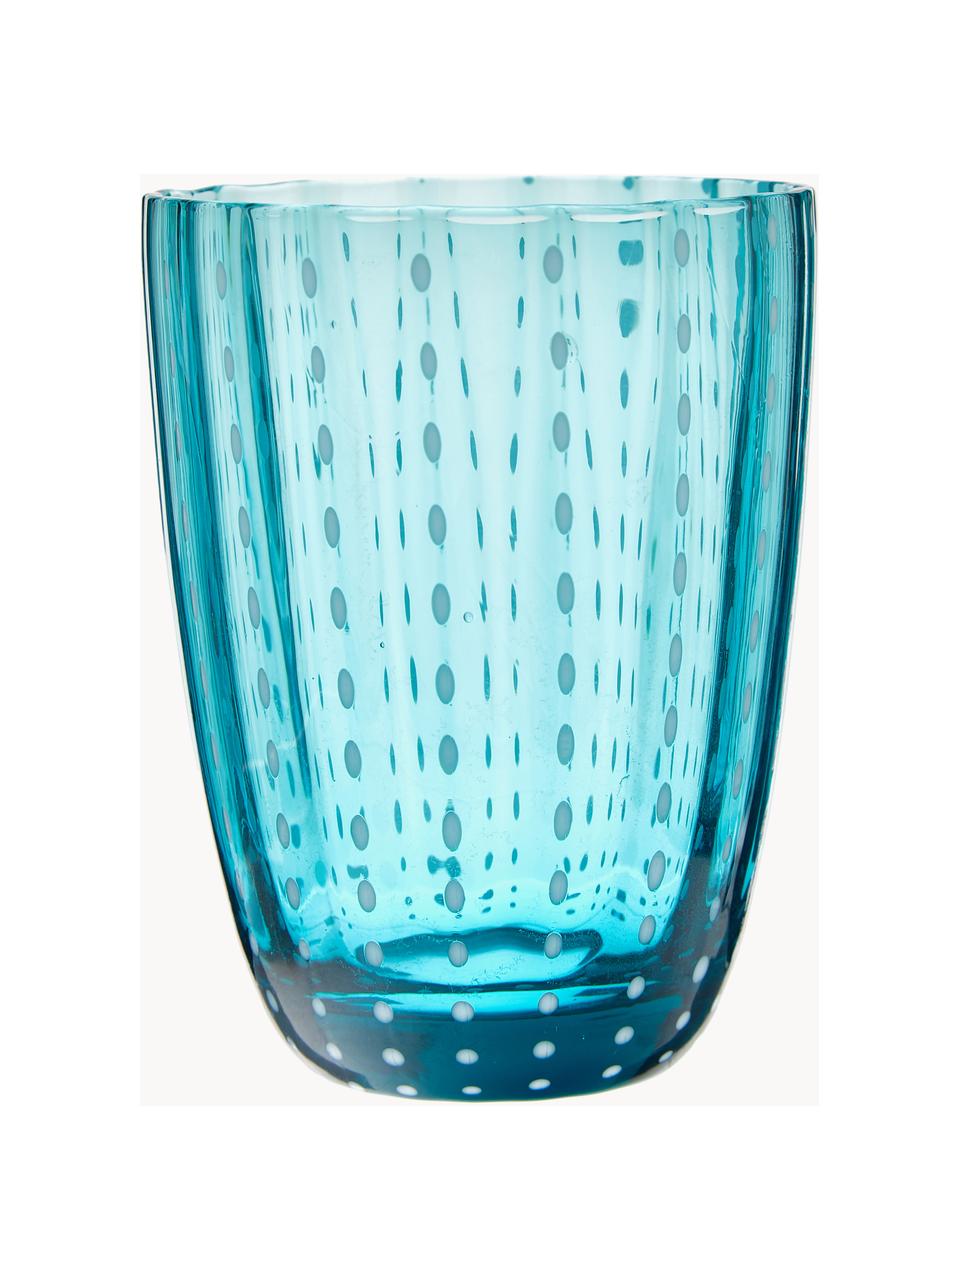 Waterglazen Kalahari, set van 6, Glas, Blauw- en turquoise tinten, transparant, Ø 9 x H 11 cm, 300 ml